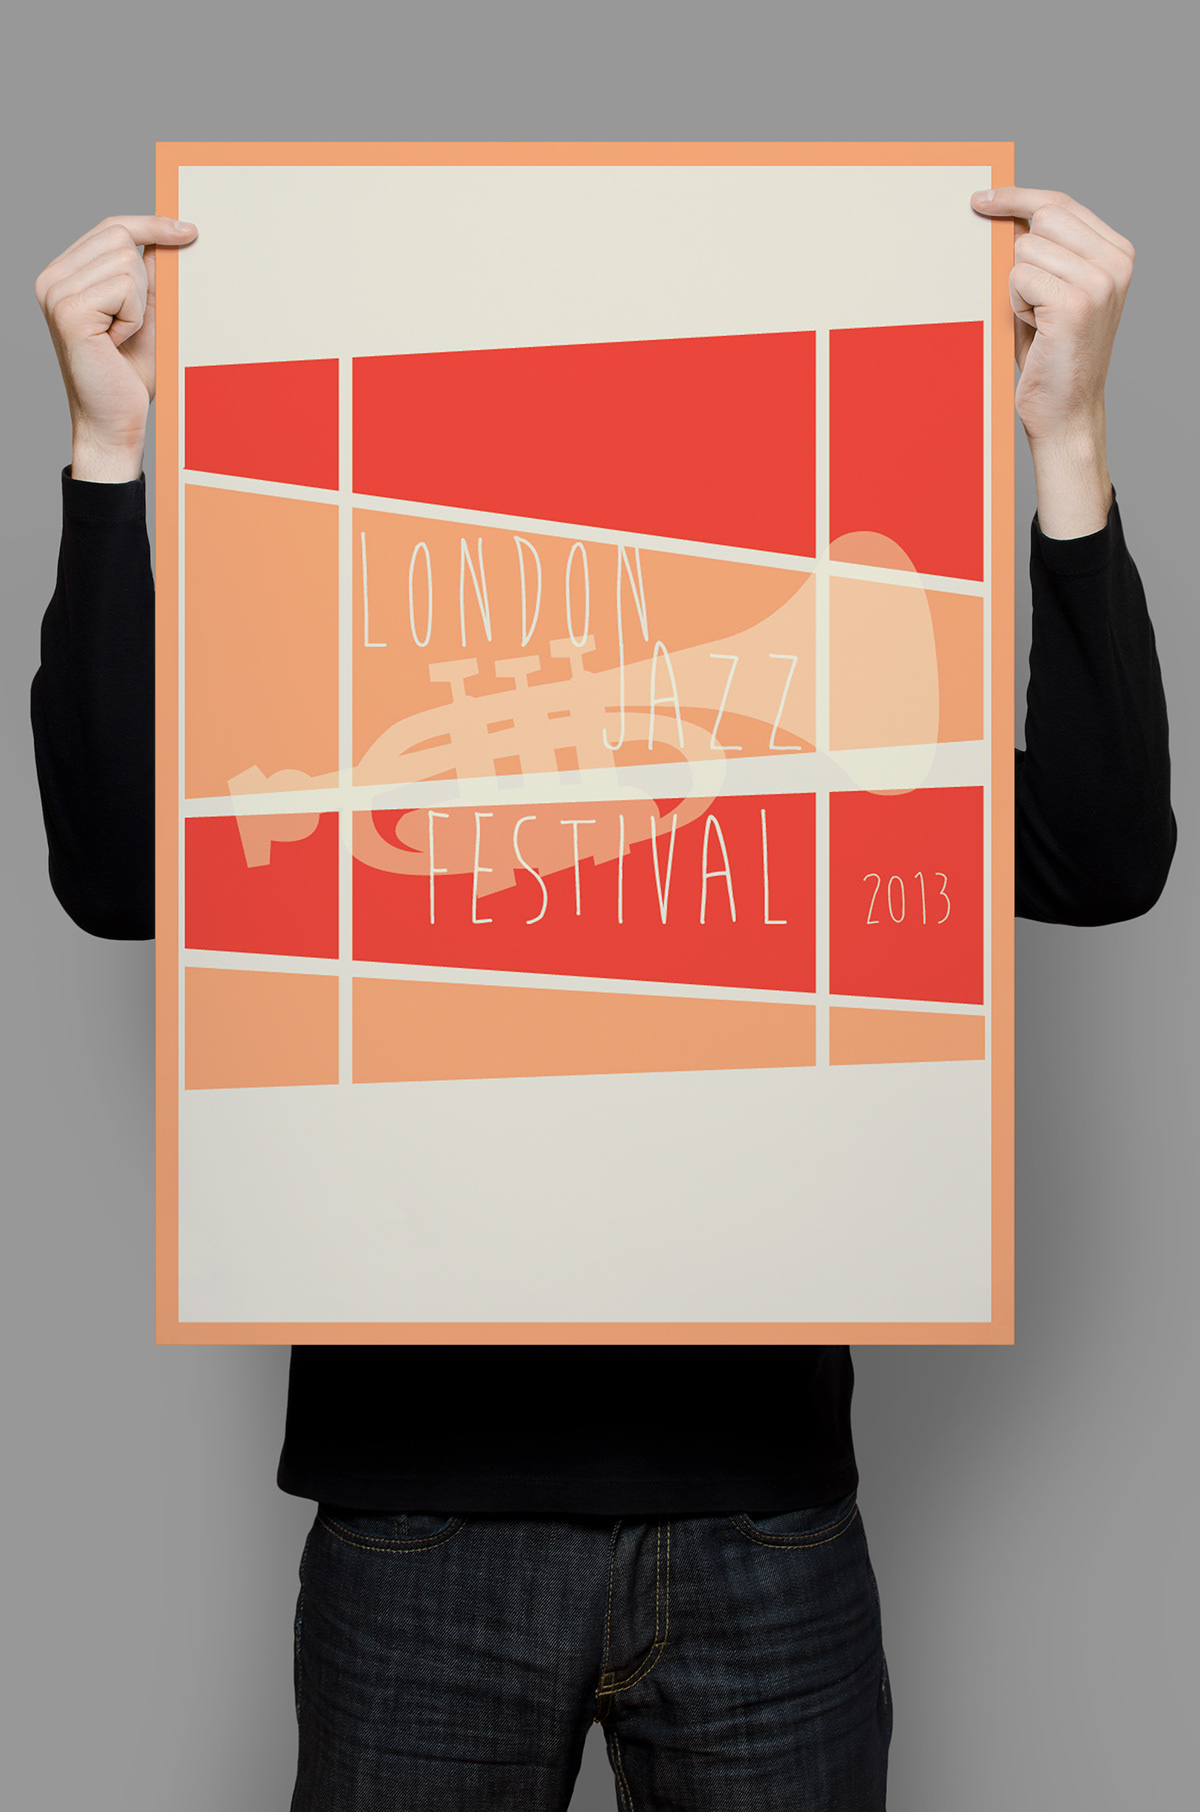 jazz festival London poster advertisement type design